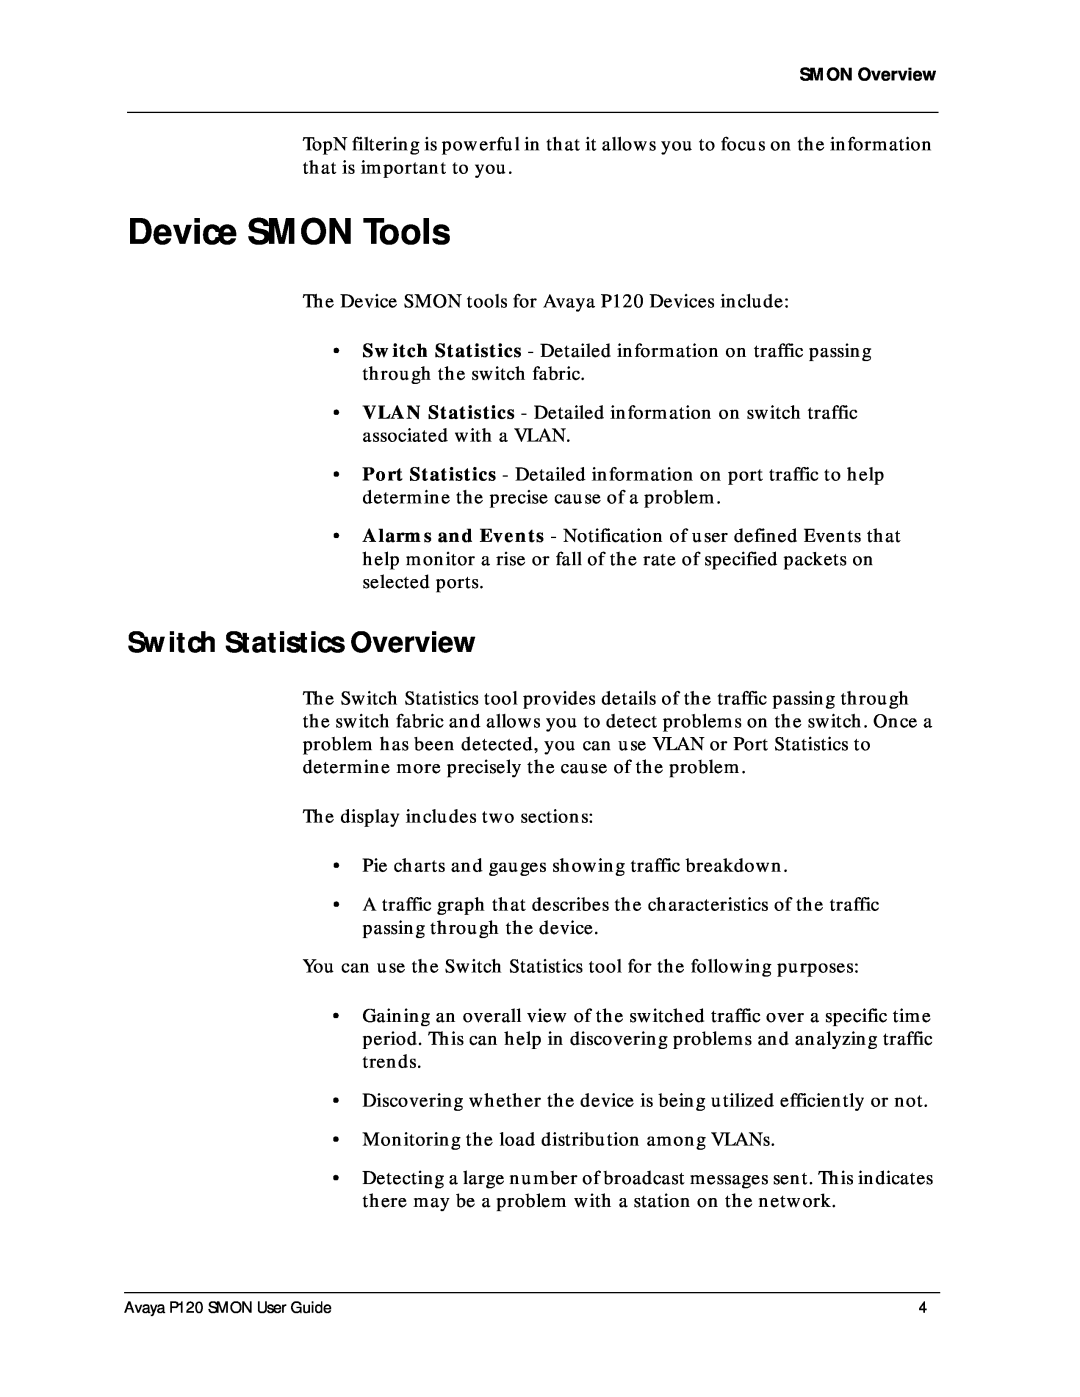 Avaya P120 SMON manual Device SMON Tools, Switch Statistics Overview 